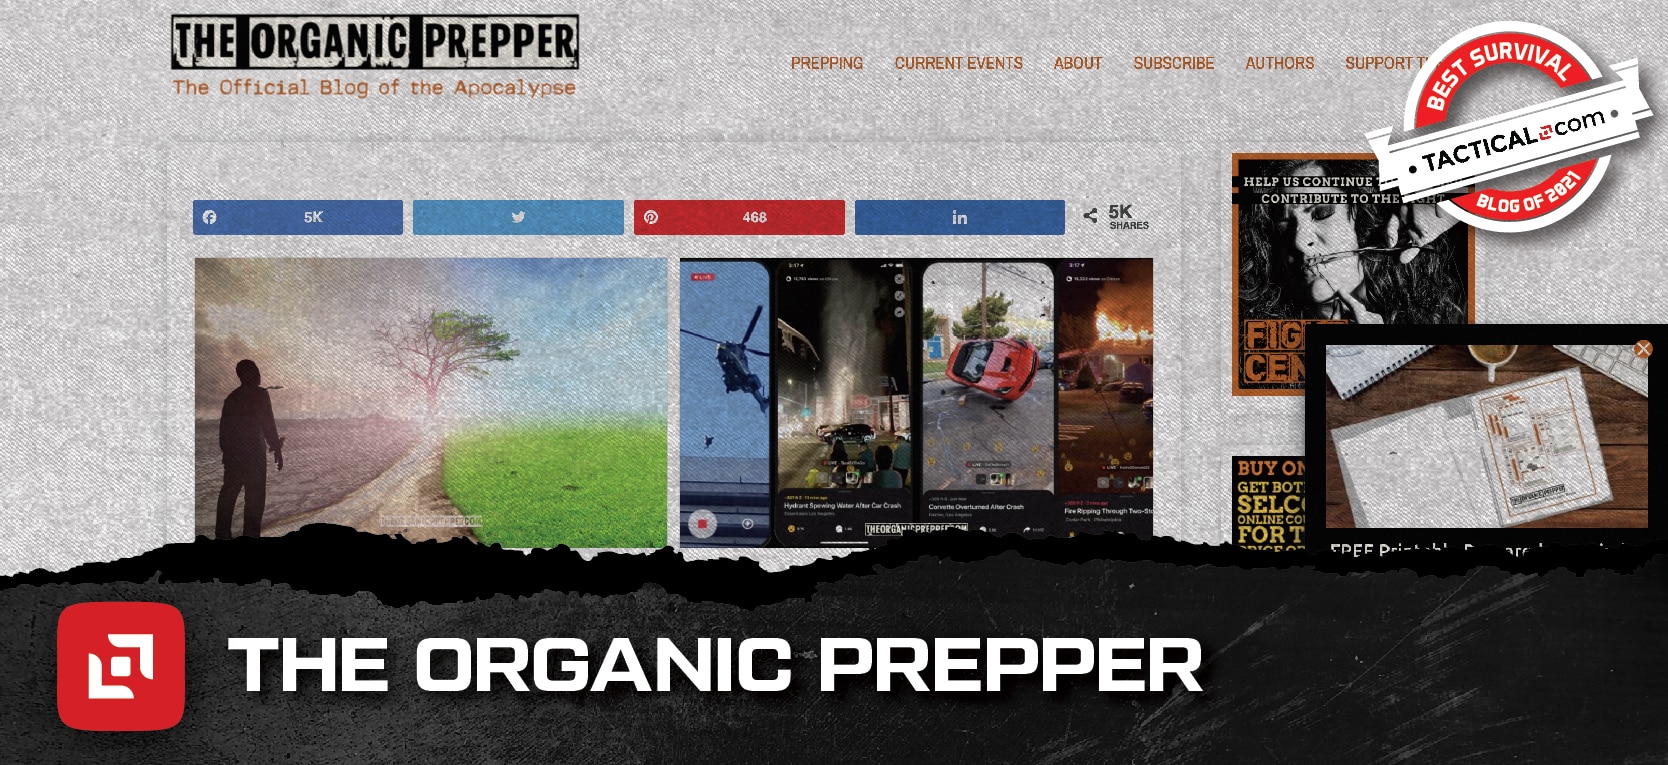 The Organic Prepper homepage